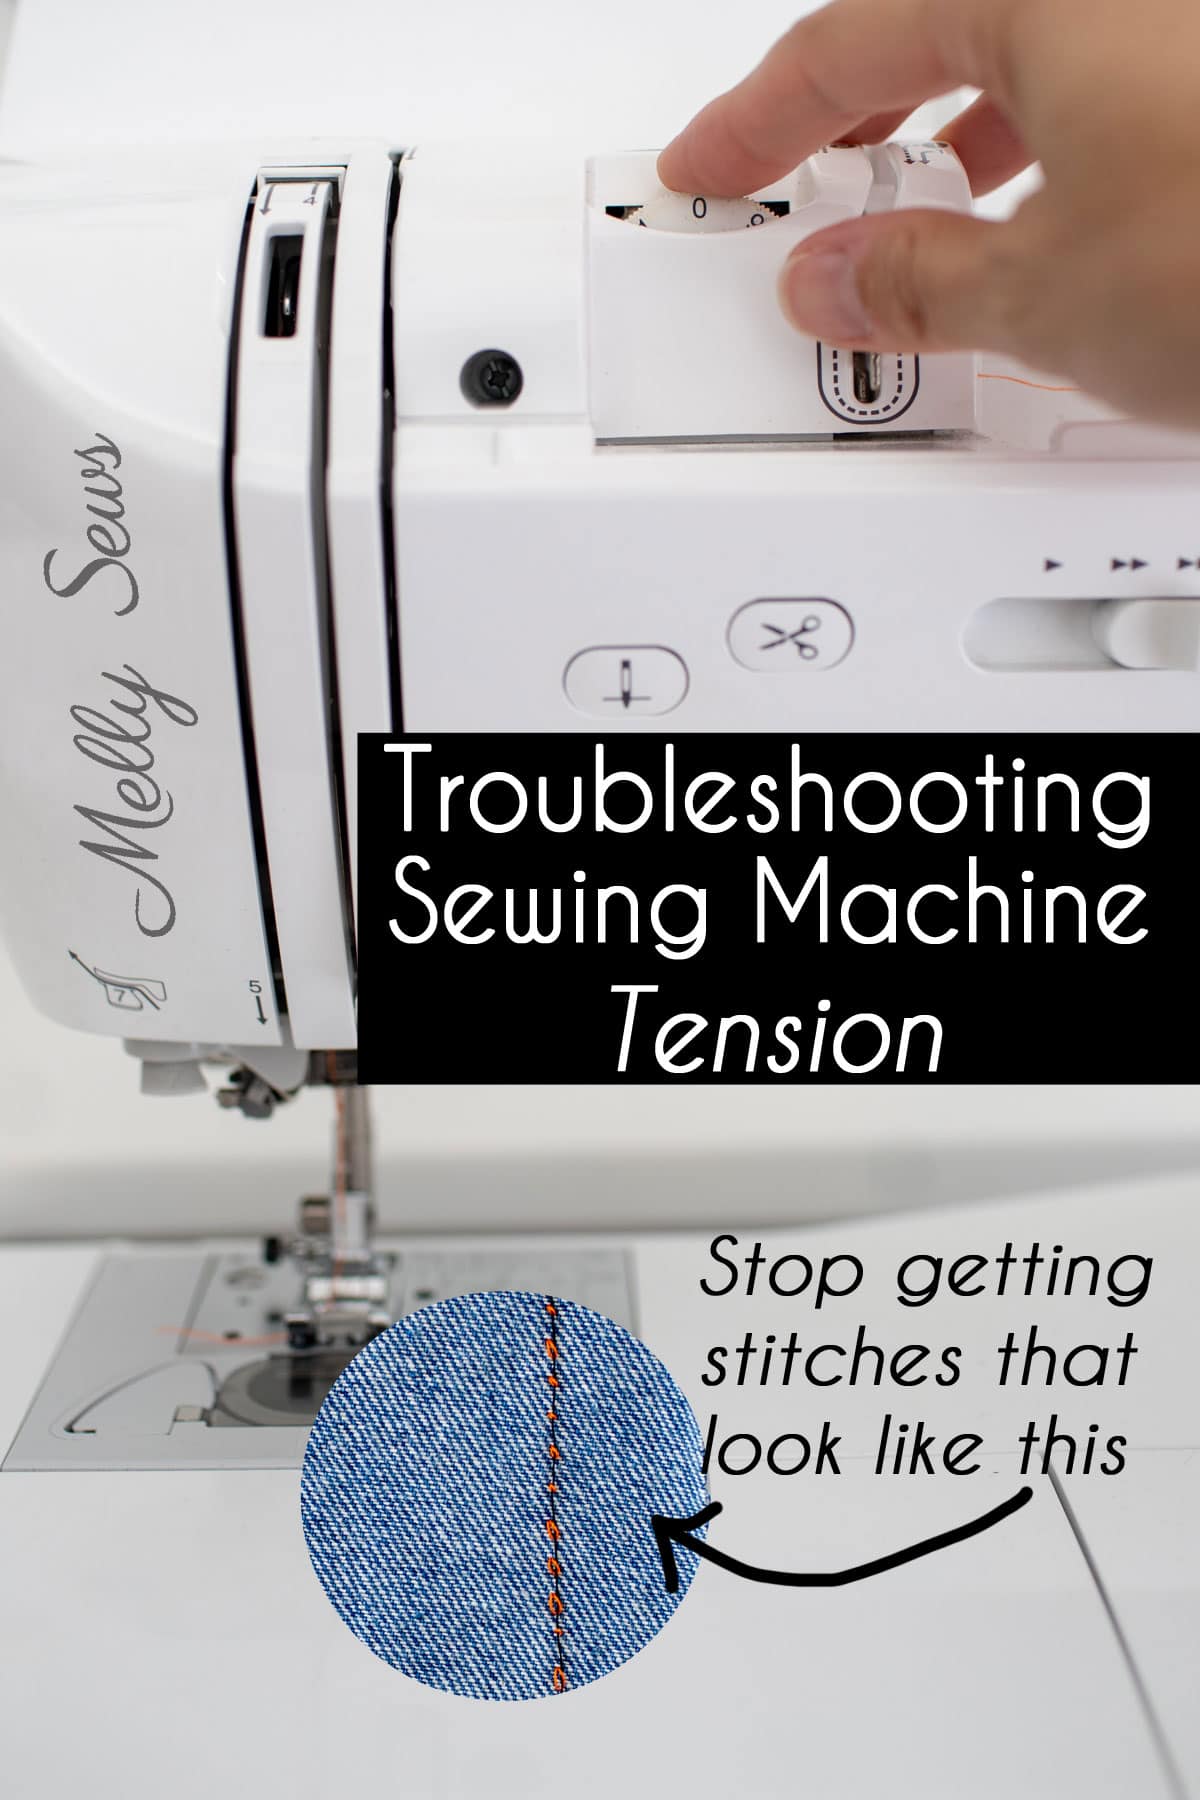 Sew Right Side Threading Needles